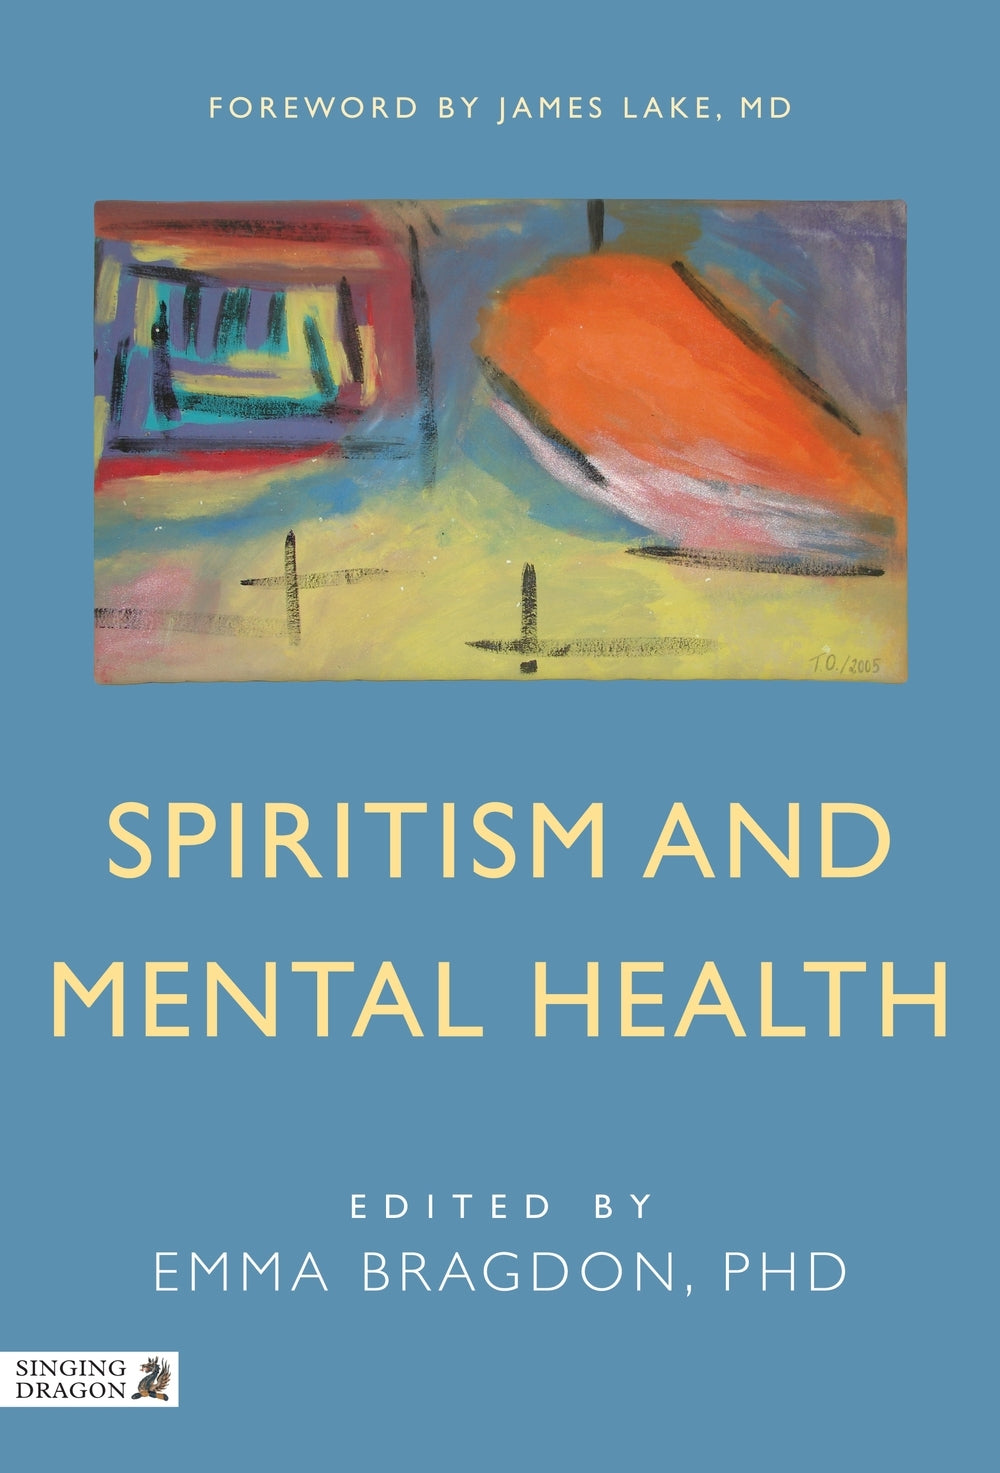 Spiritism and Mental Health by No Author Listed, Emma Bragdon, James Lake